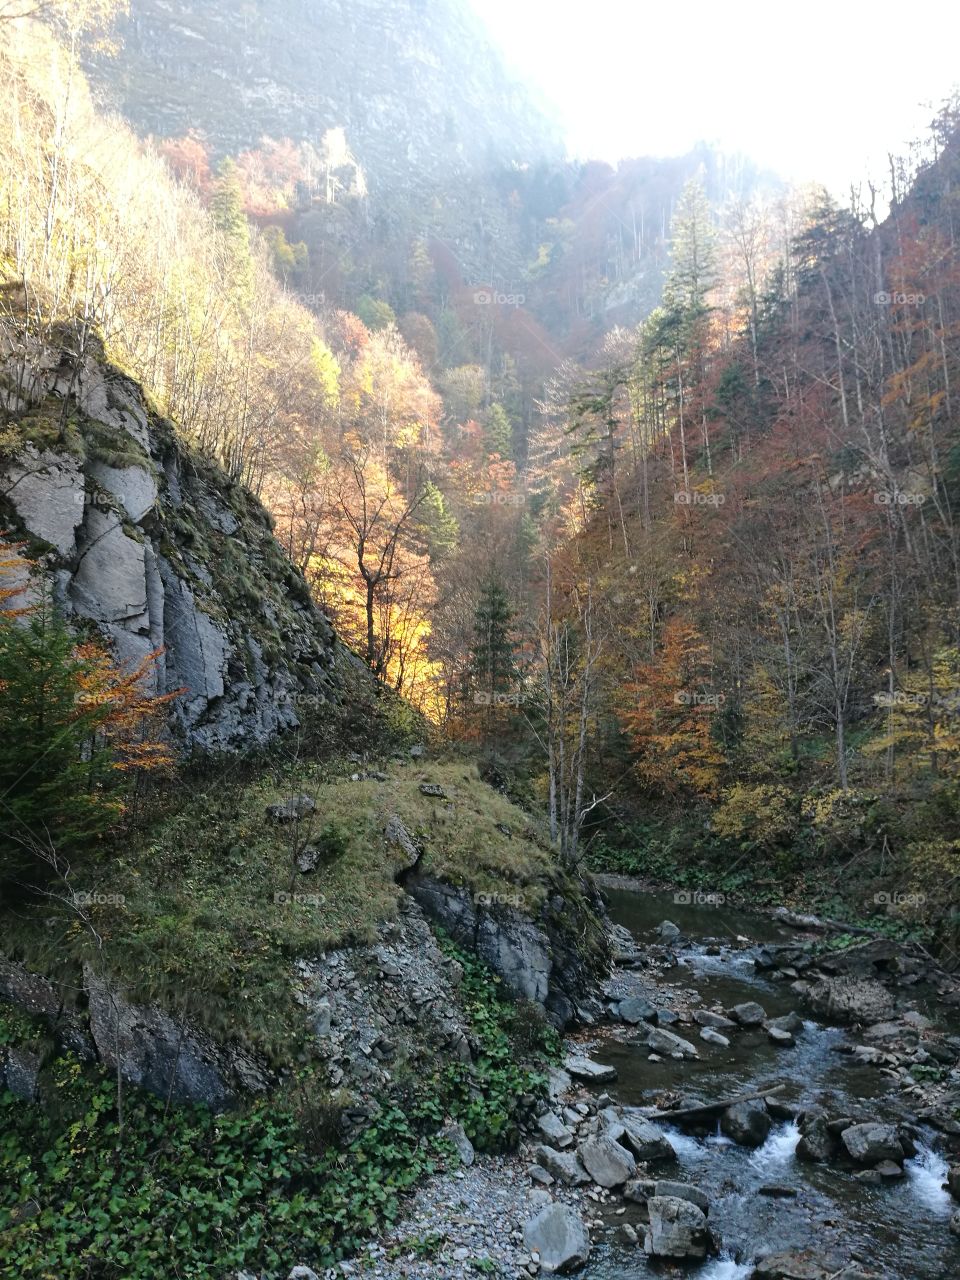 #Lepșa #Vrancea #Romania #Mountain #Autumn